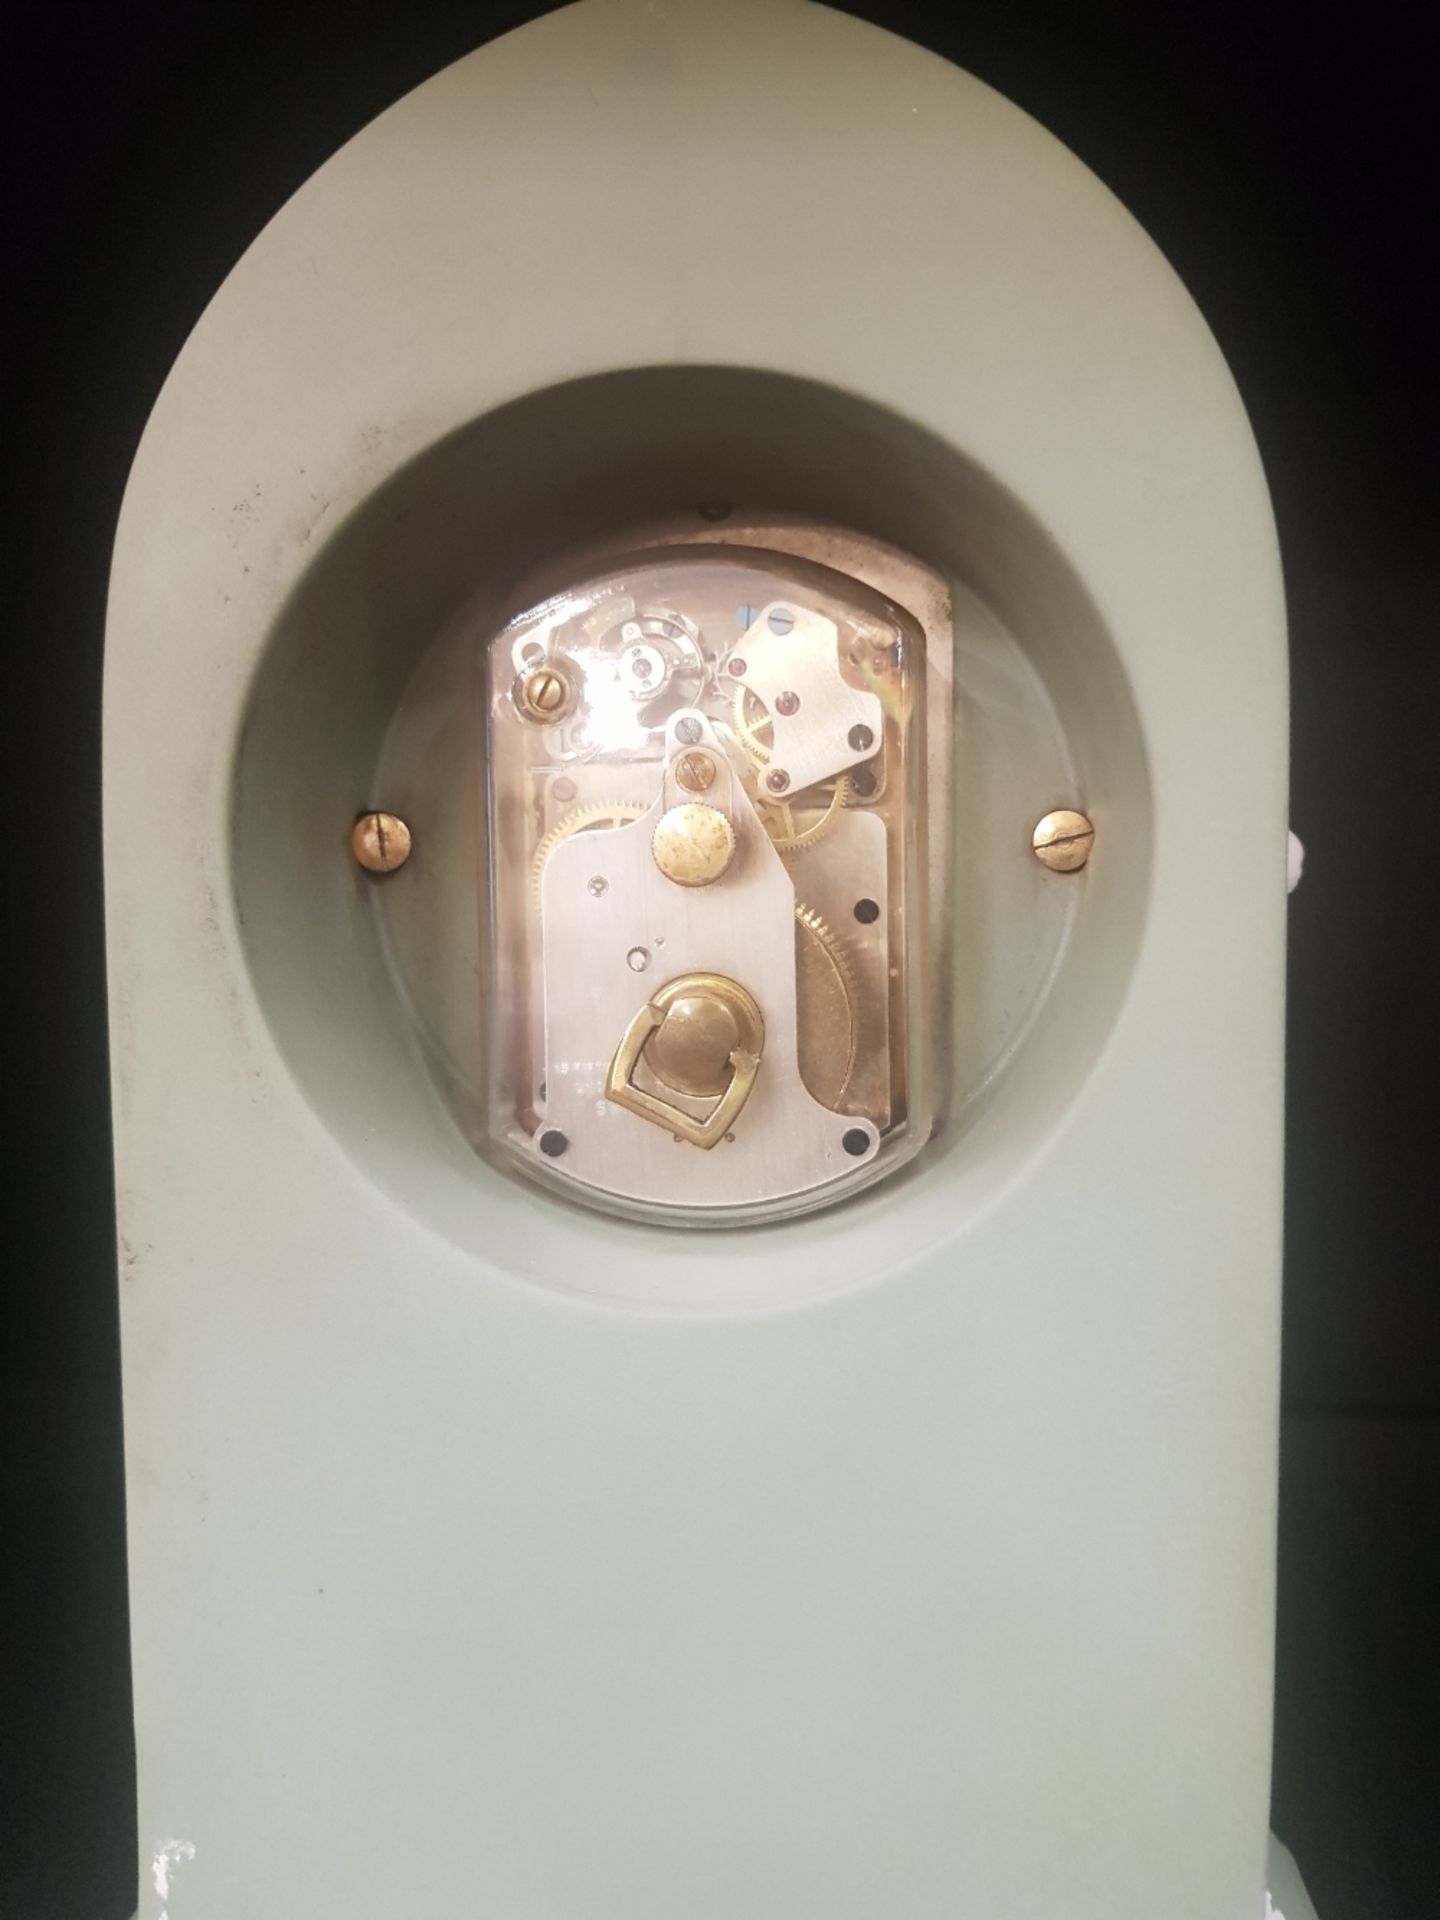 Wedgwood Green jasperware Mantle Clock with Mechanical movement - Image 2 of 2